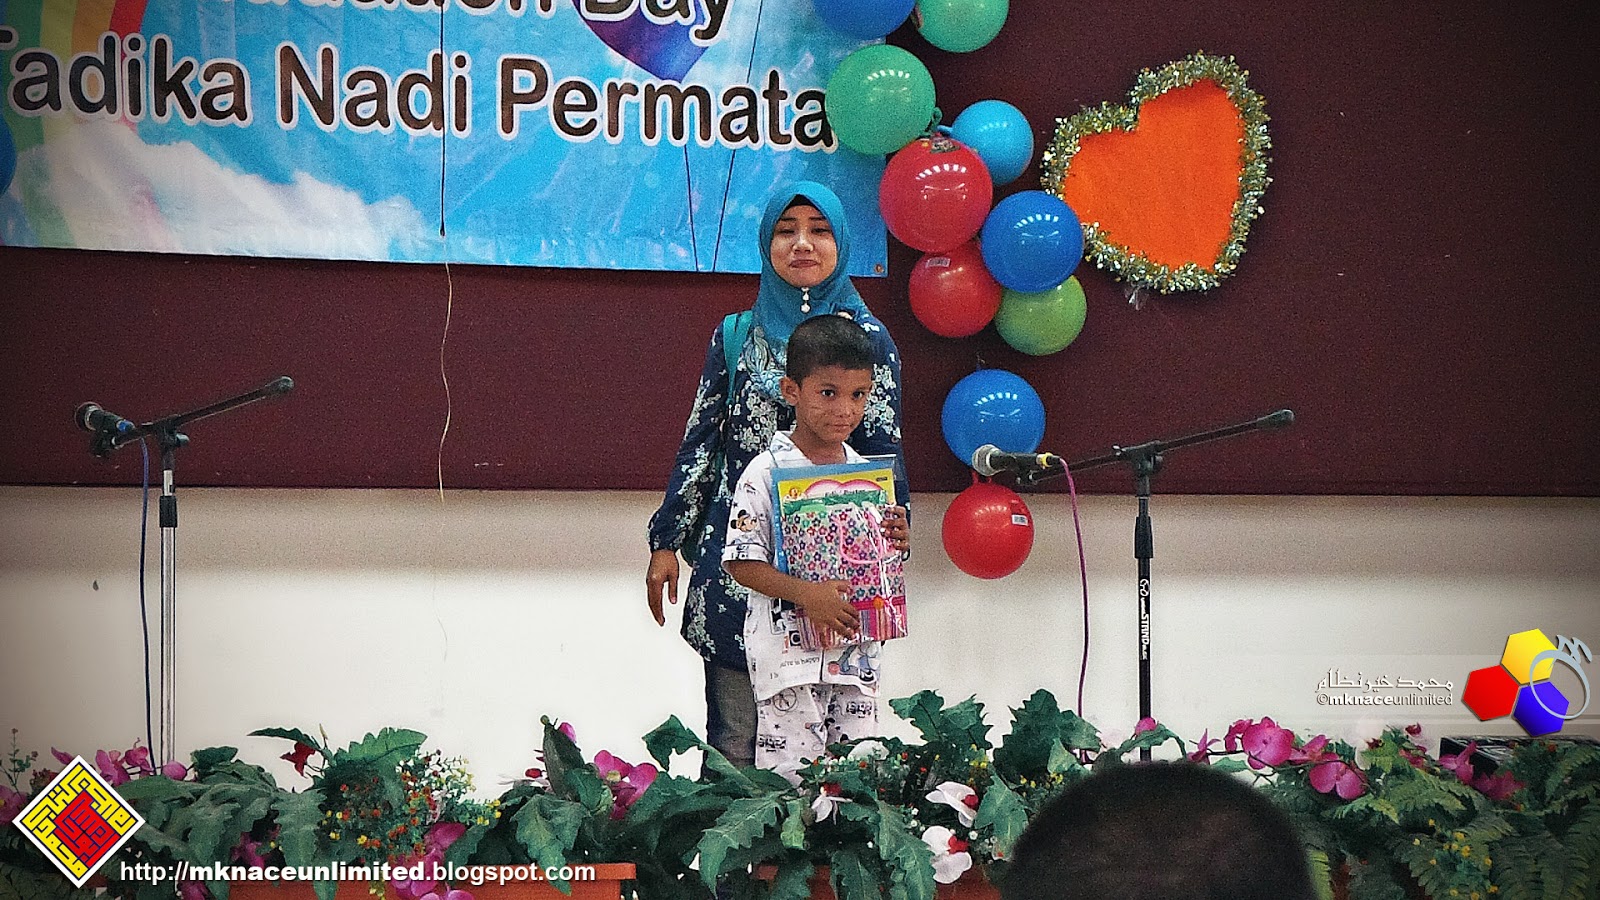 Tadika Nadi Permata Concert and Graduation Day  mknace 